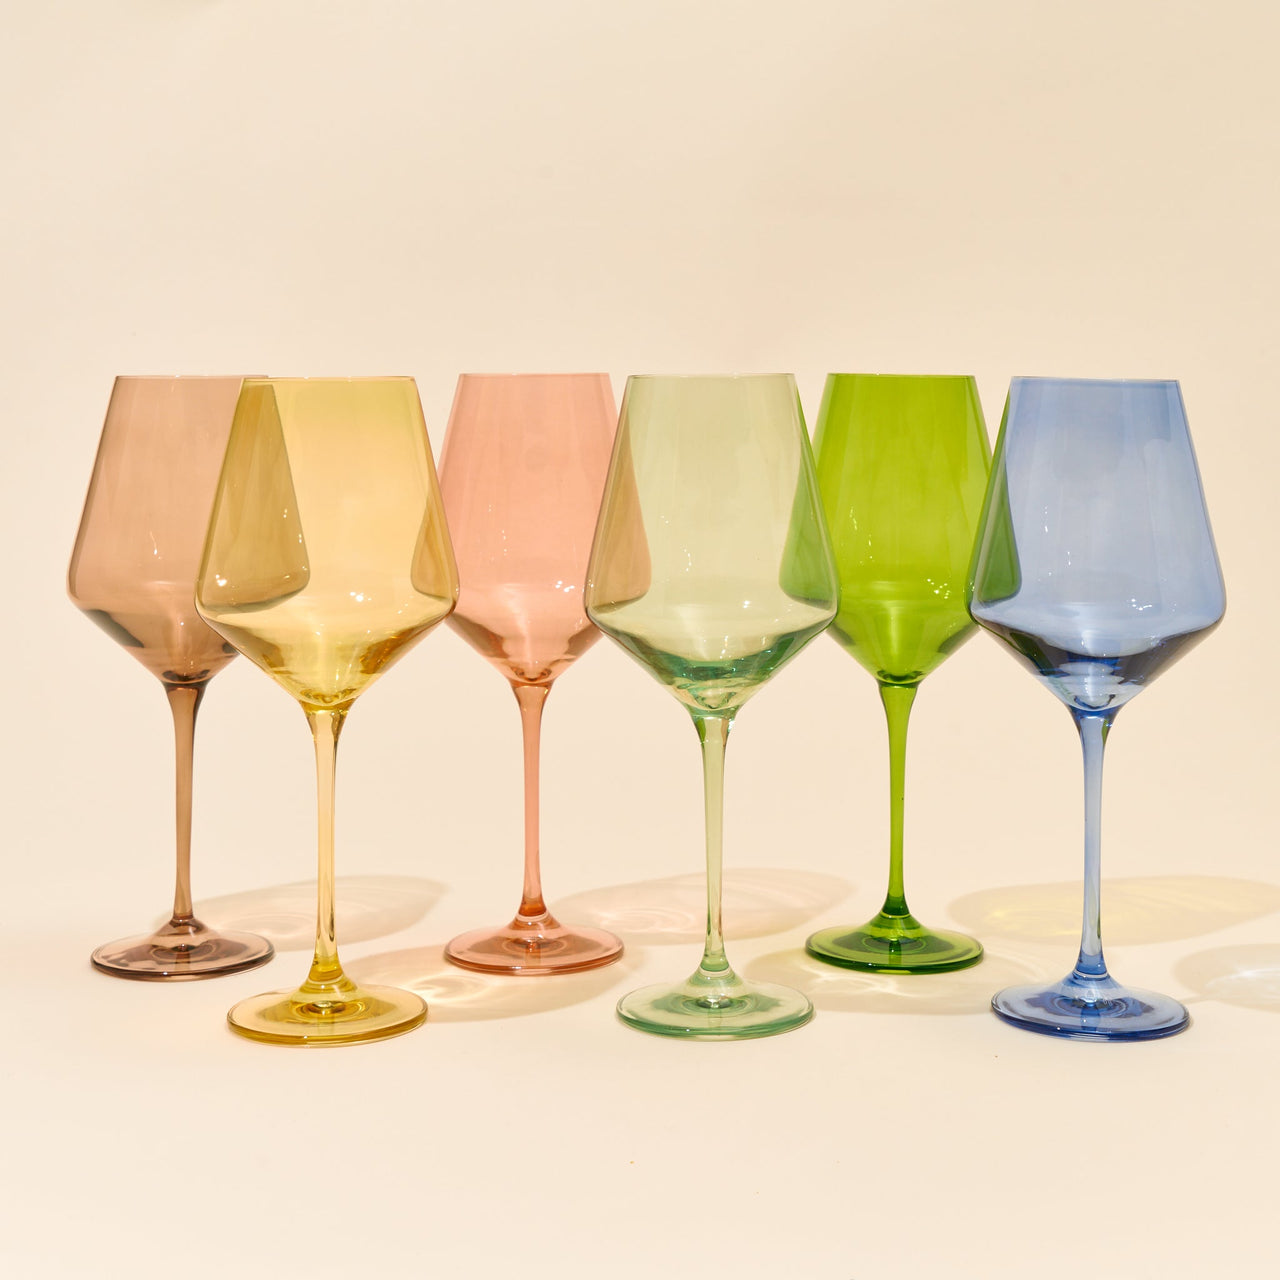 Estelle Colored Glass Estelle Hand-Blown Colored Wine Glasses (Set of 6) - Stemmed Wine Glass, Mint Green